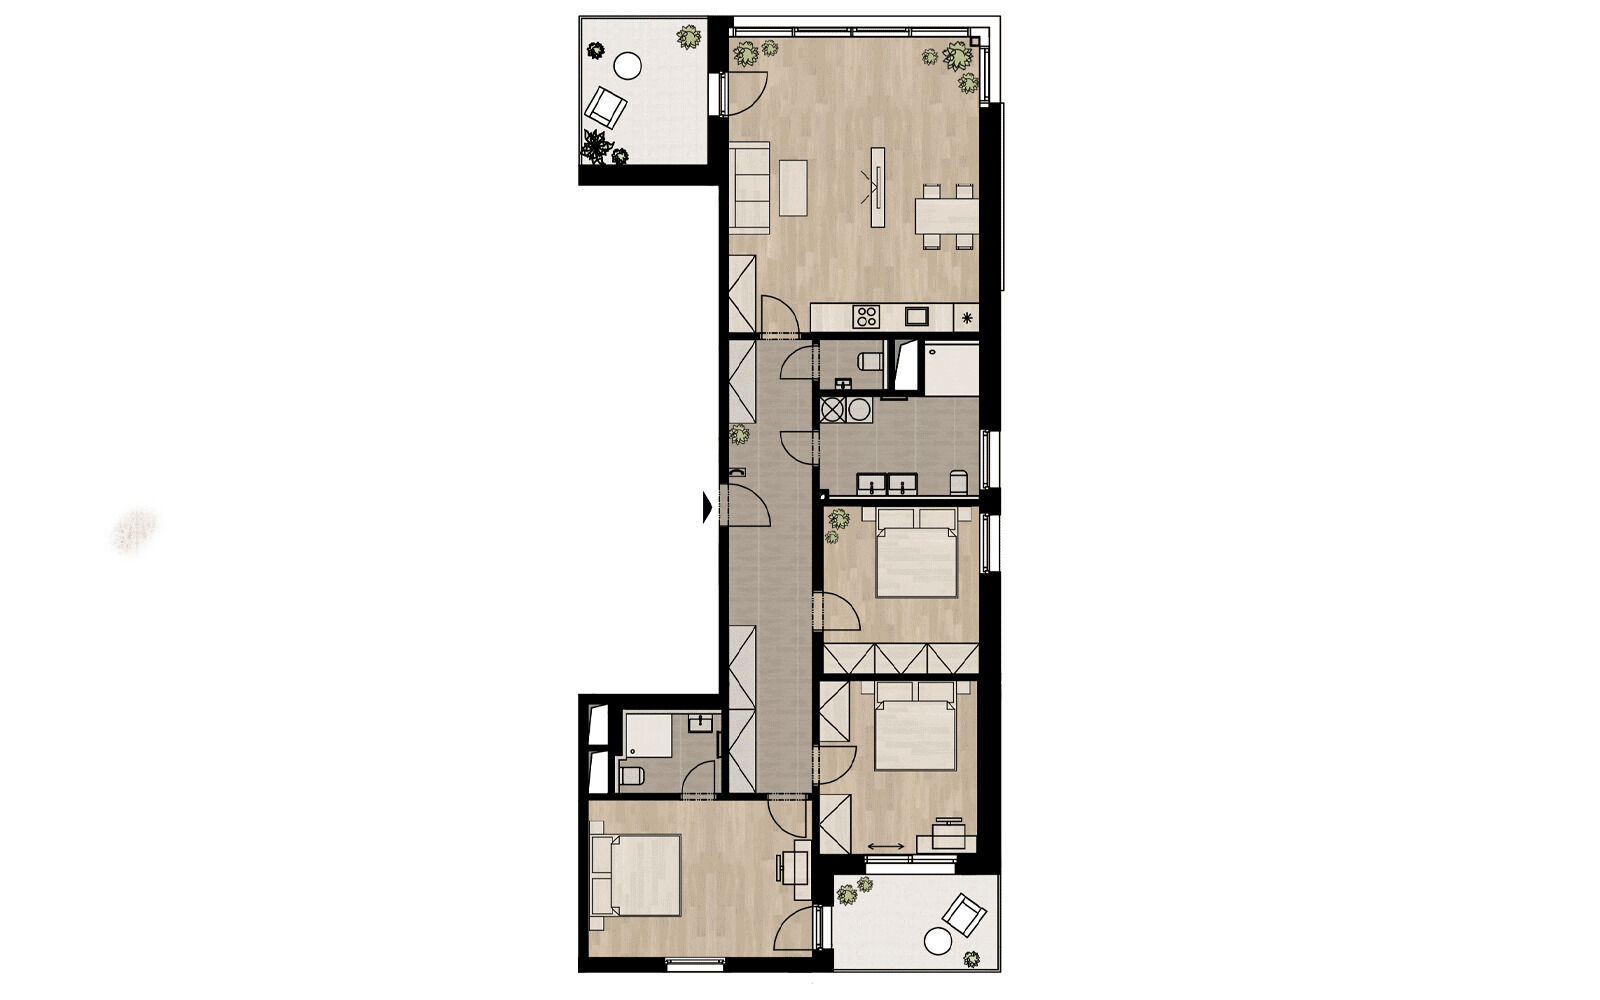 Rezidence Radimova, byt 4+kk 112,4 m2, 2X lodžie 16,1 m2